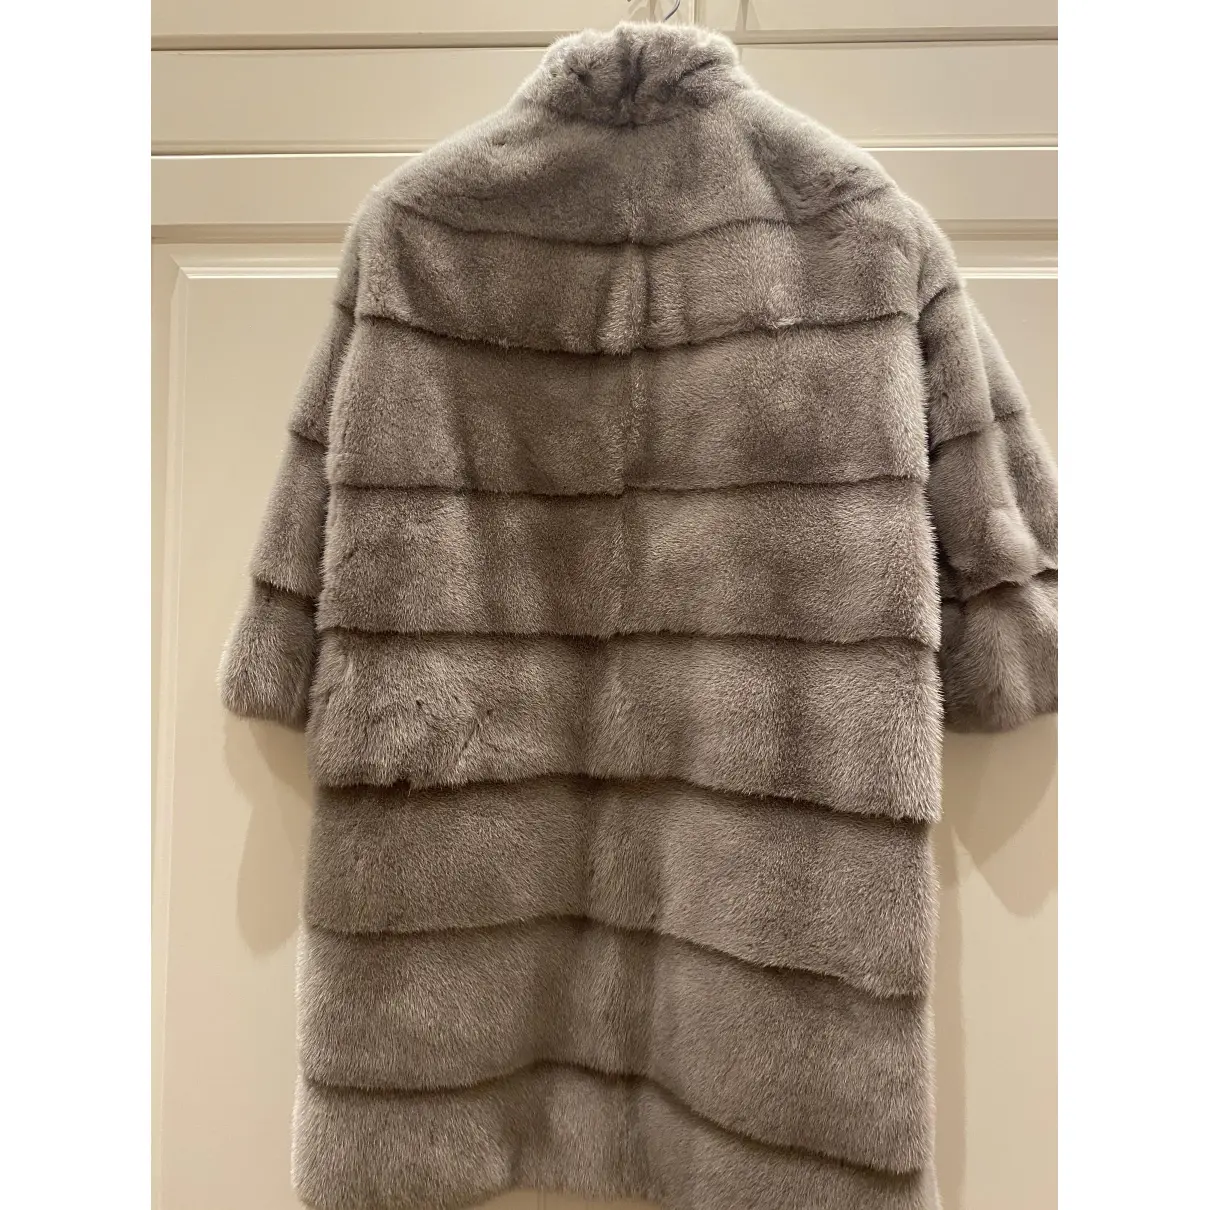 Buy Manzoni 24 Mink coat online